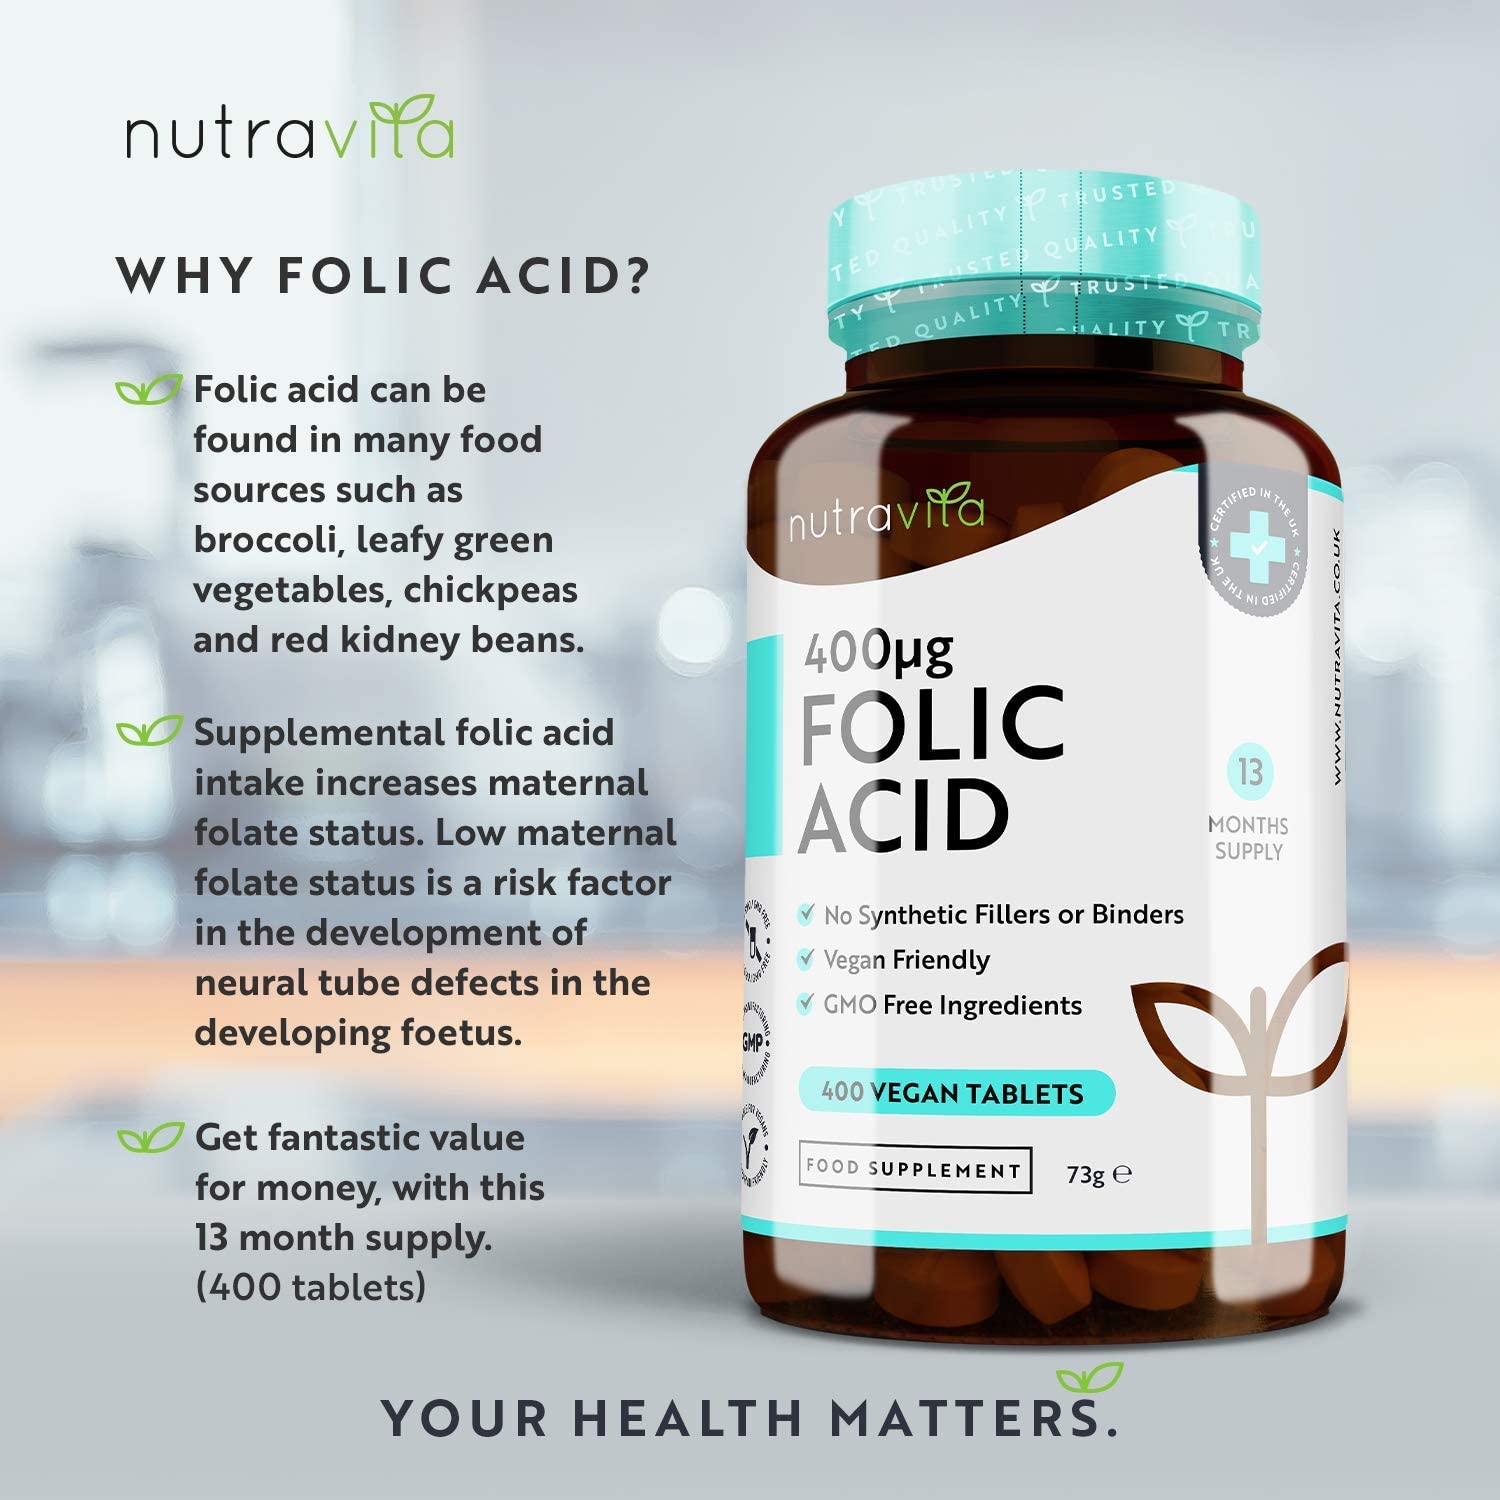 Folic Acid Tablets 400ug - 400 Vegan Tablets